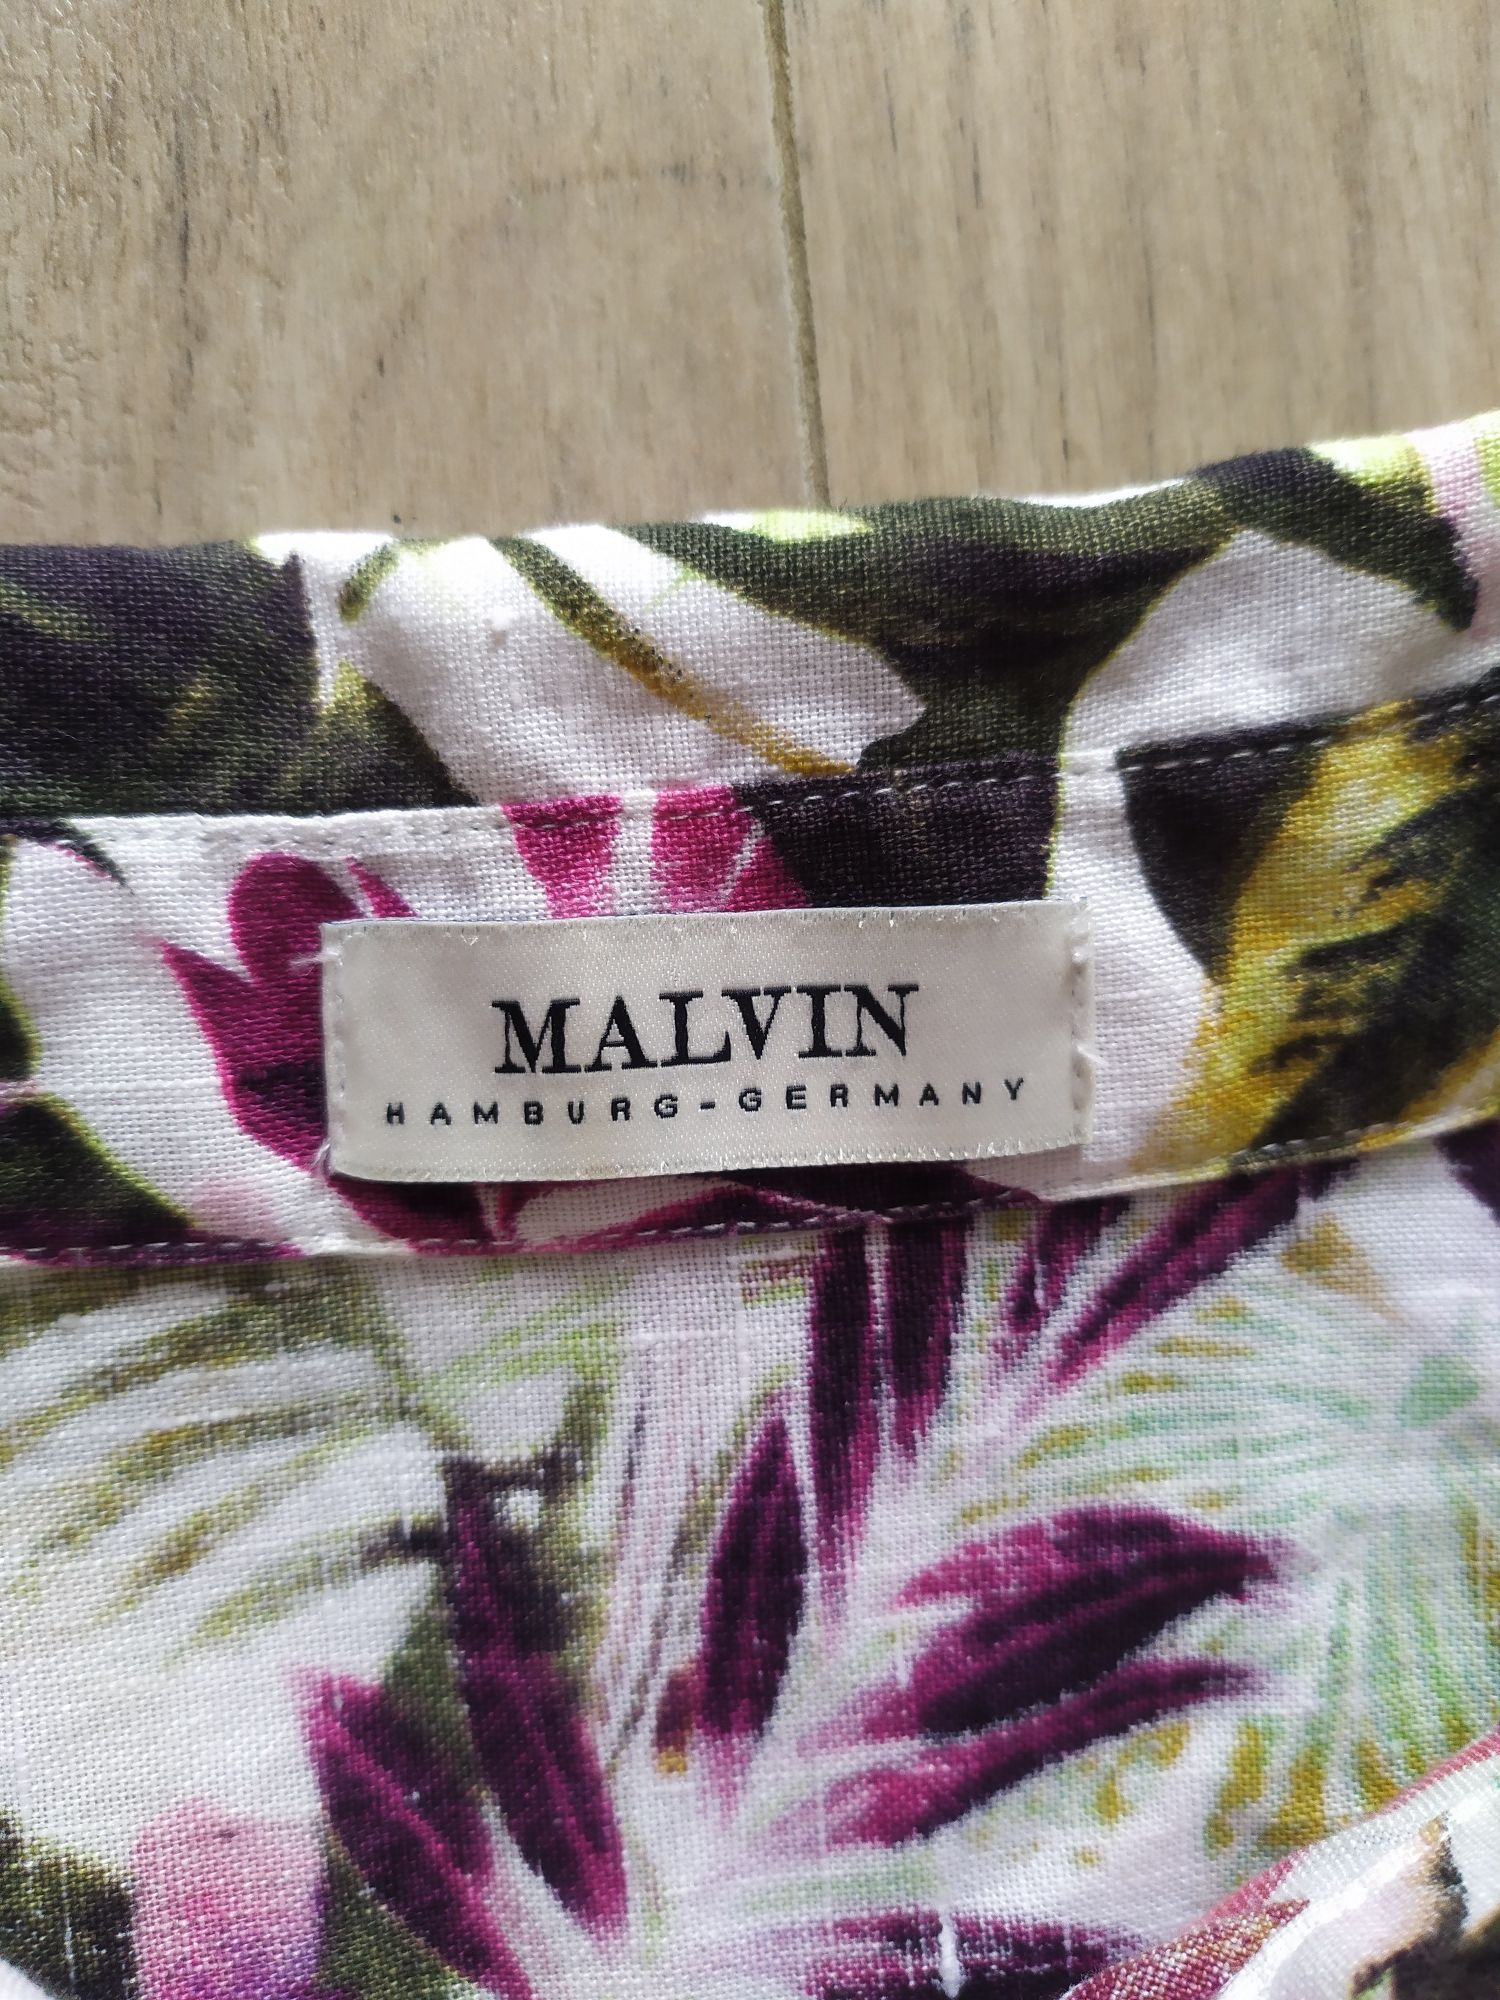 Tunika koszula narzutka Malvin lniana 100% len rozmiar 38/40